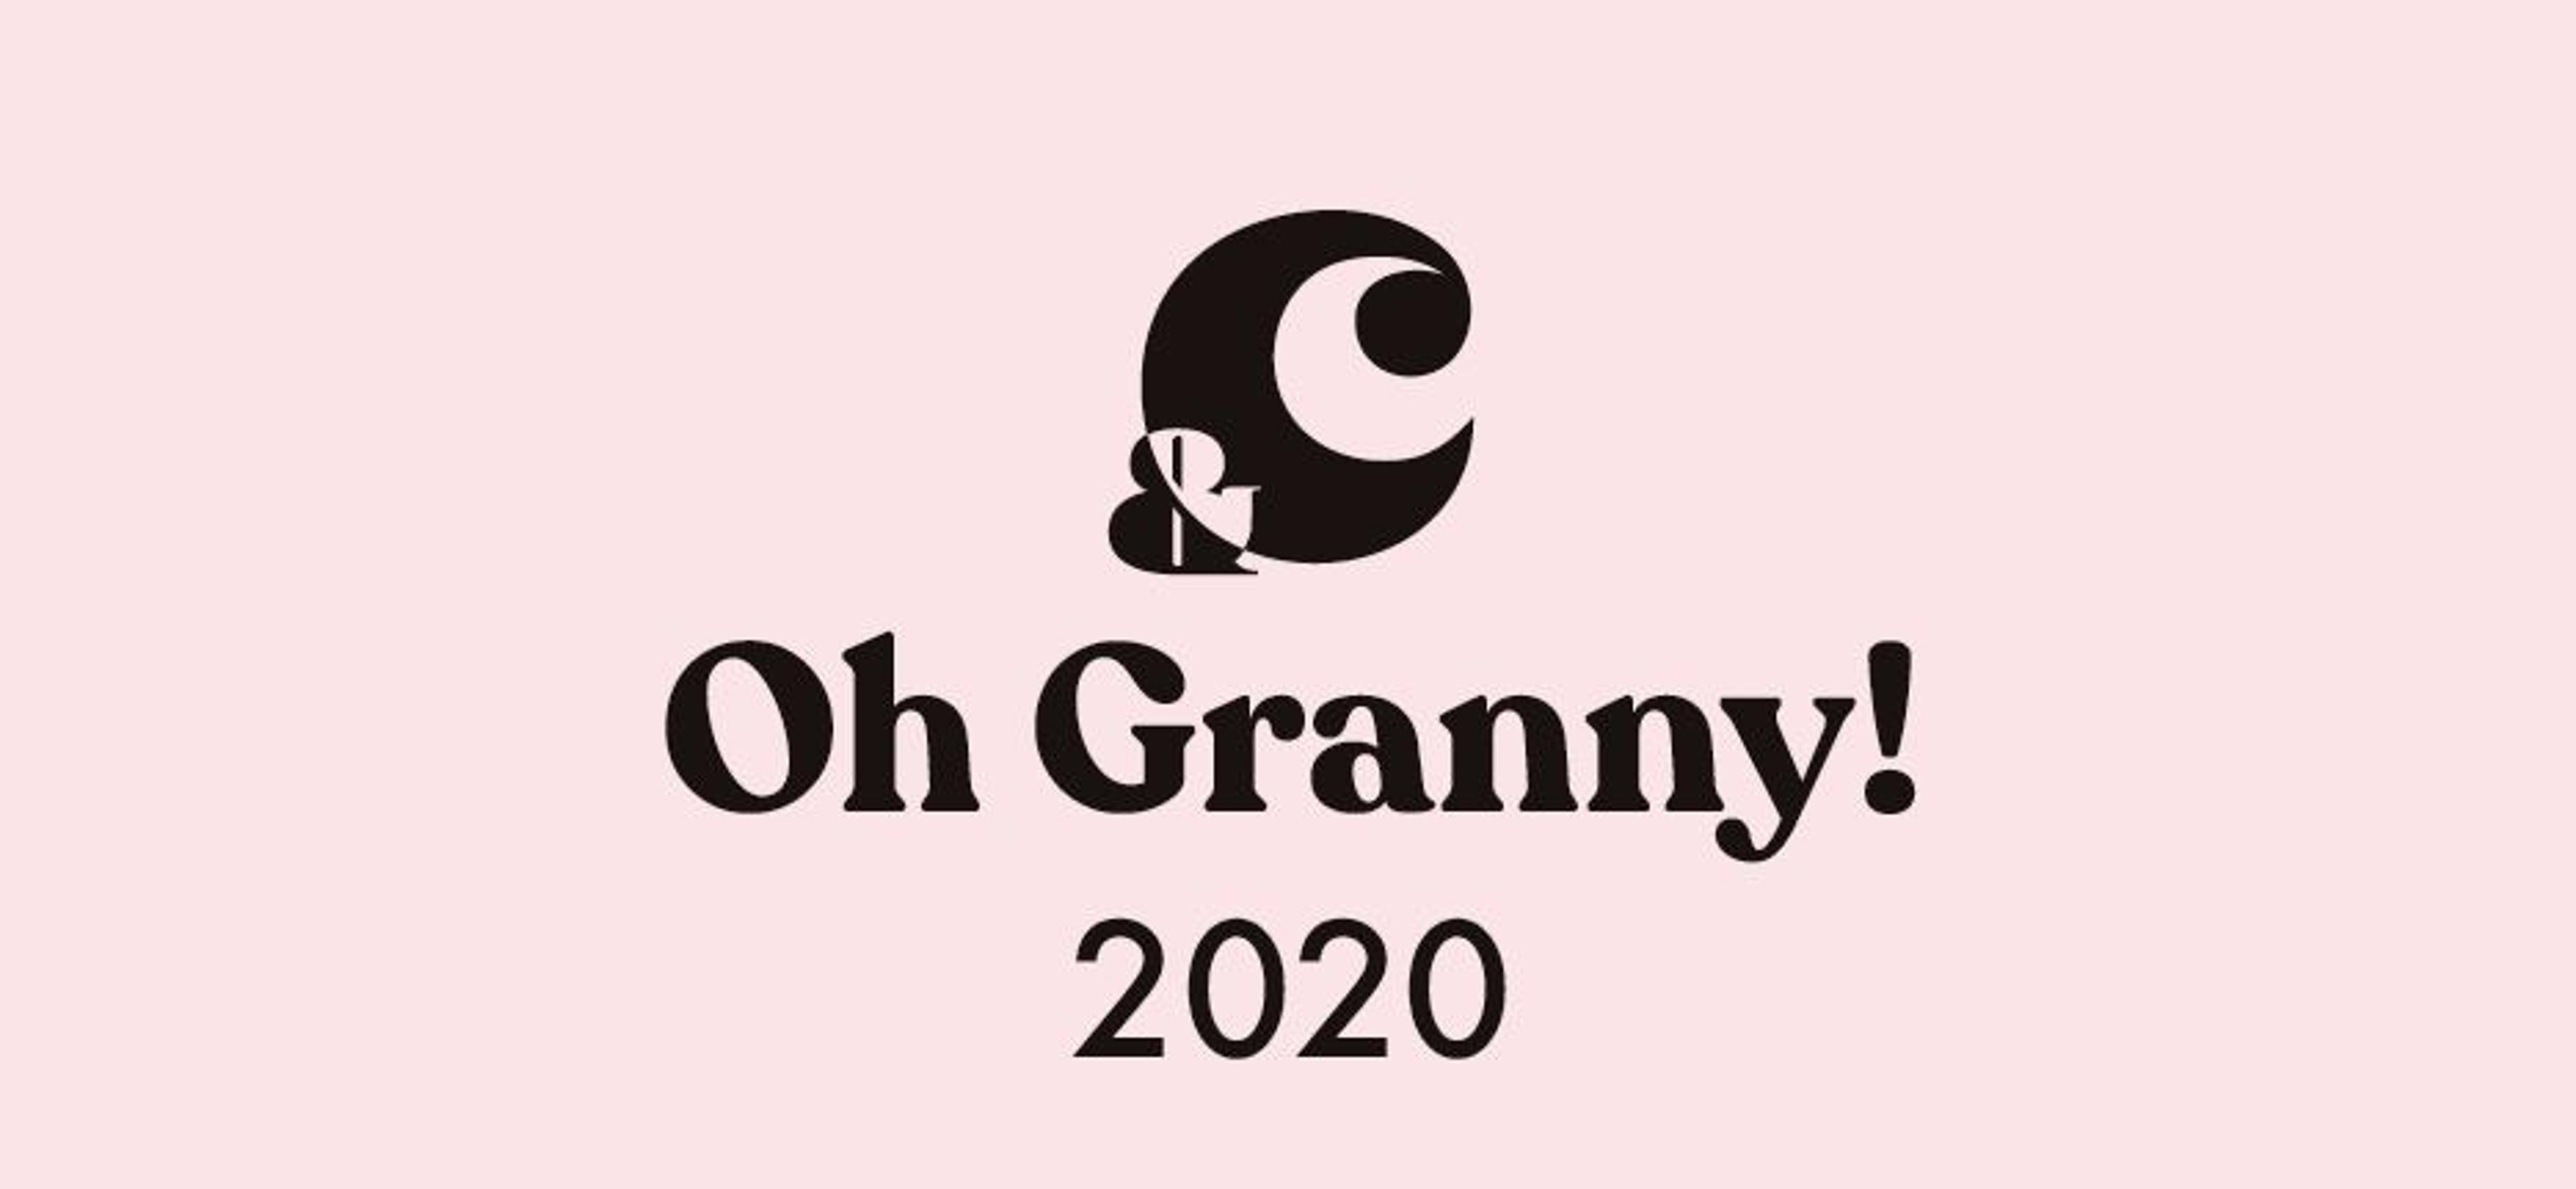 Oh Granny!